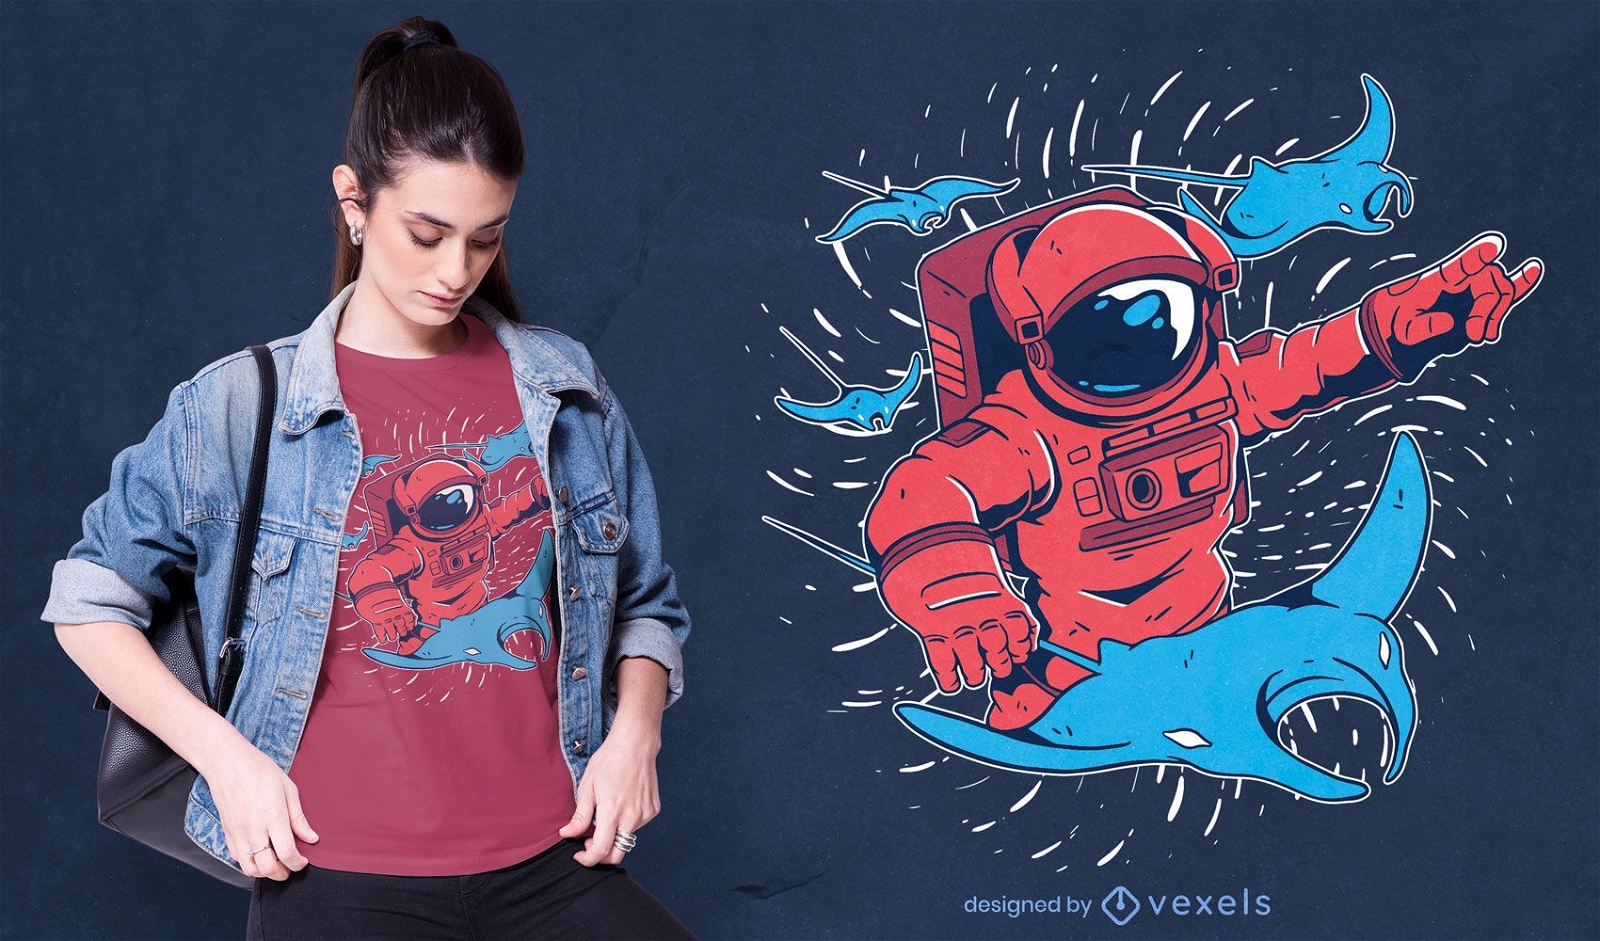 Astronaut devil rays t-shirt design